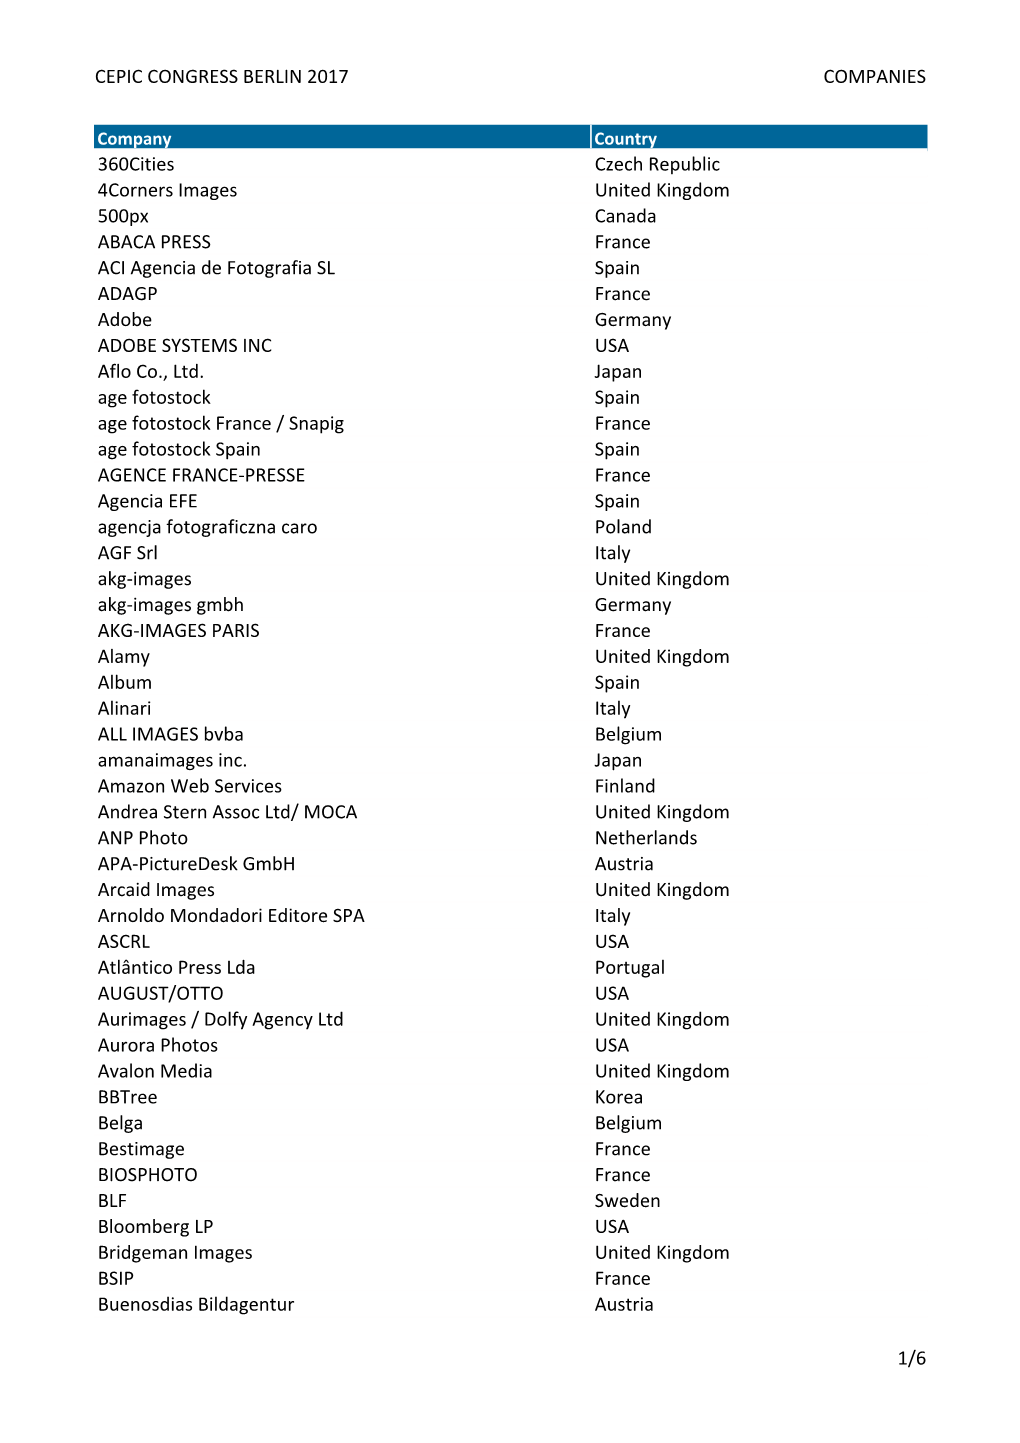 List of Companies.Xlsx